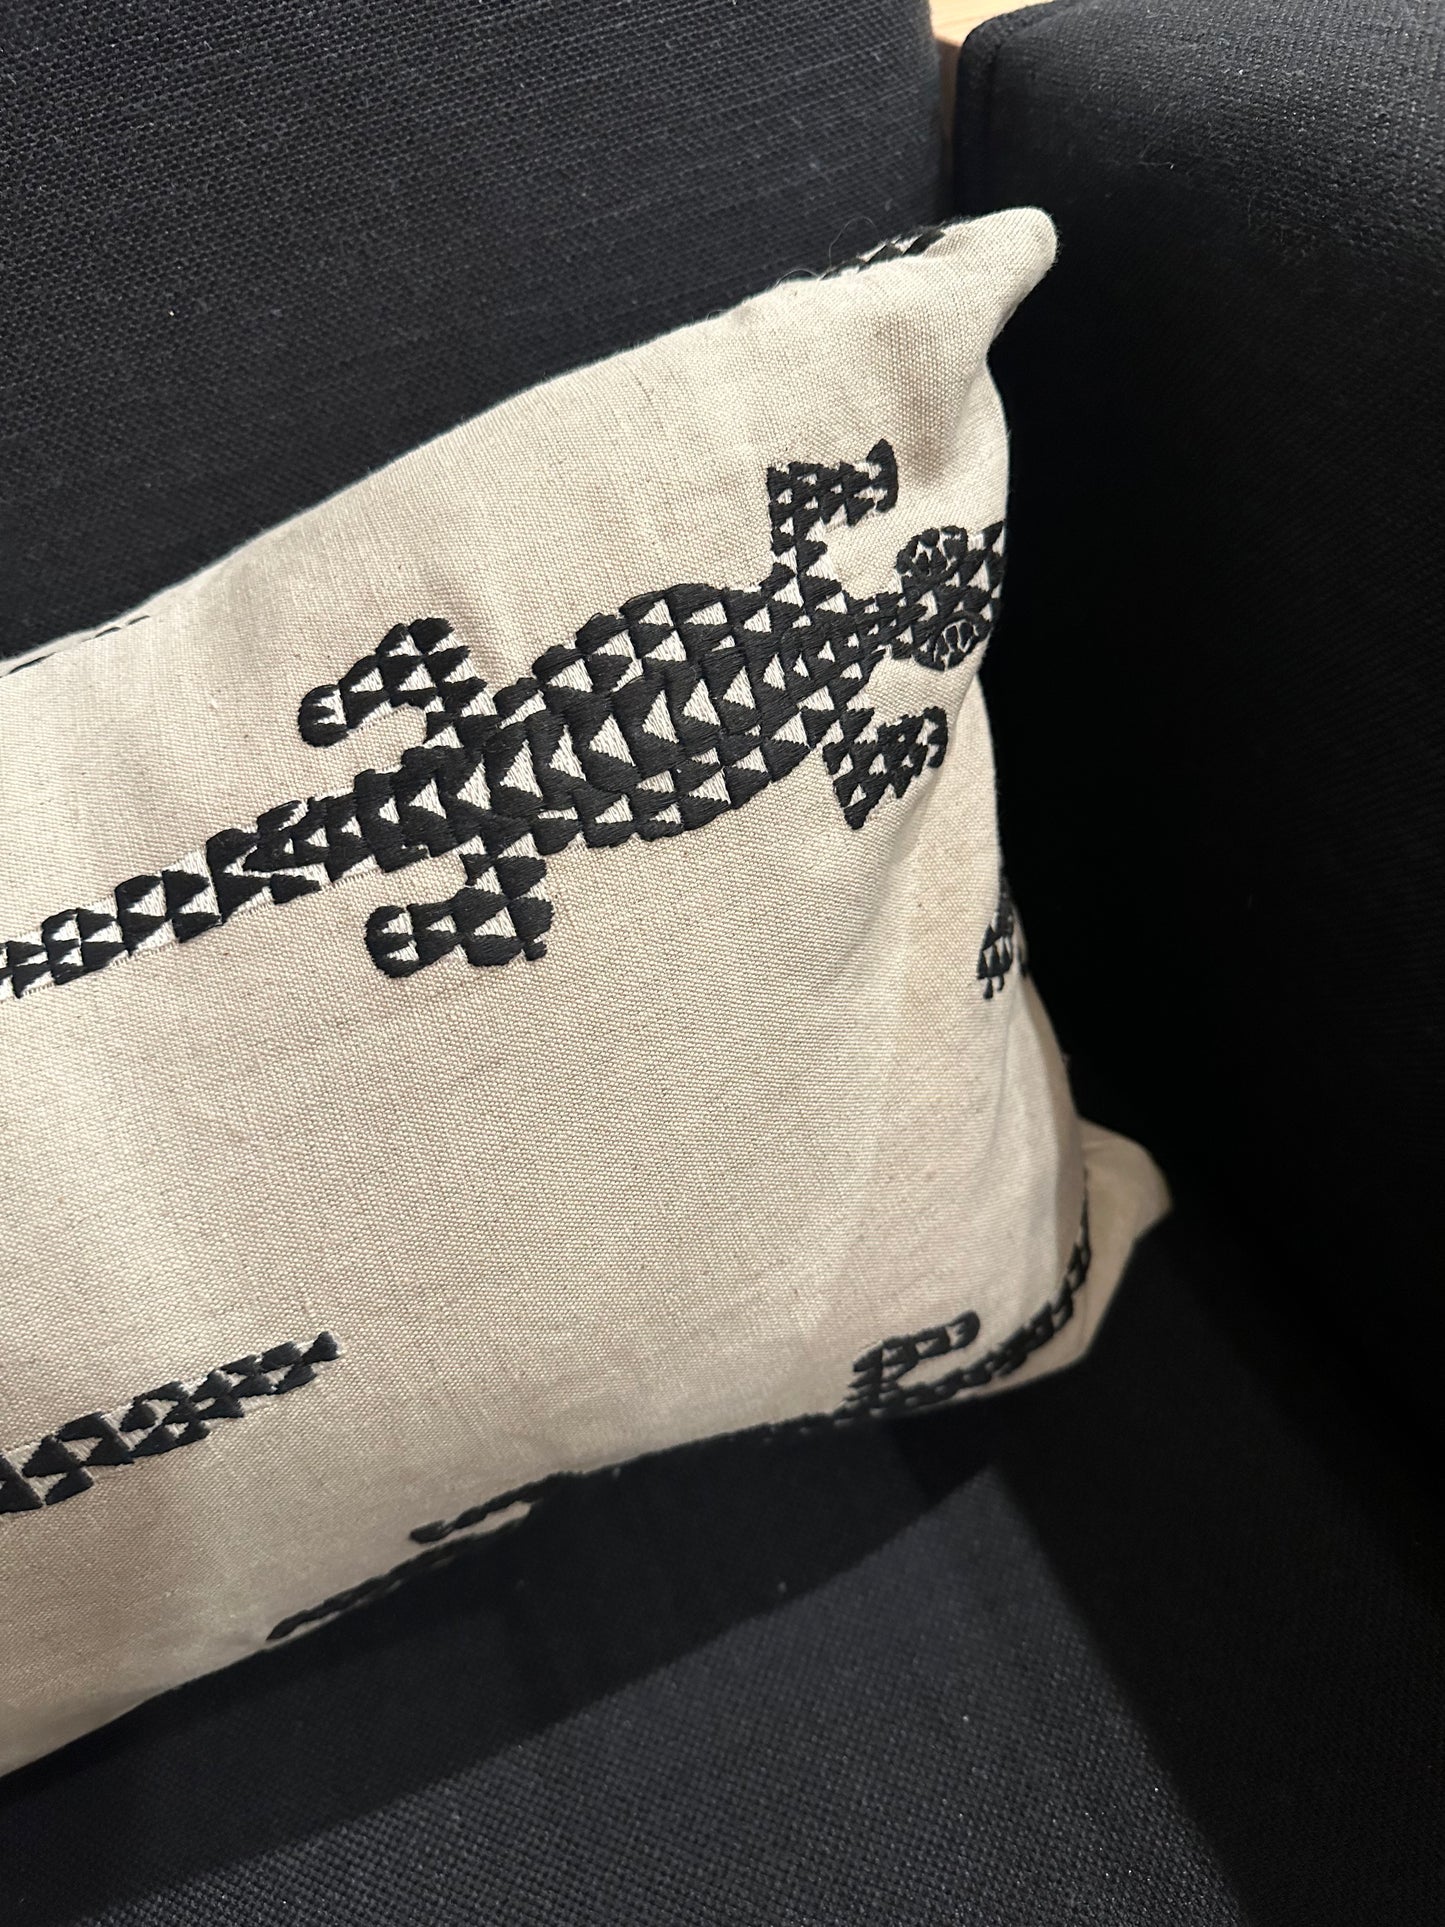 Baracoa Embroidery Pillow